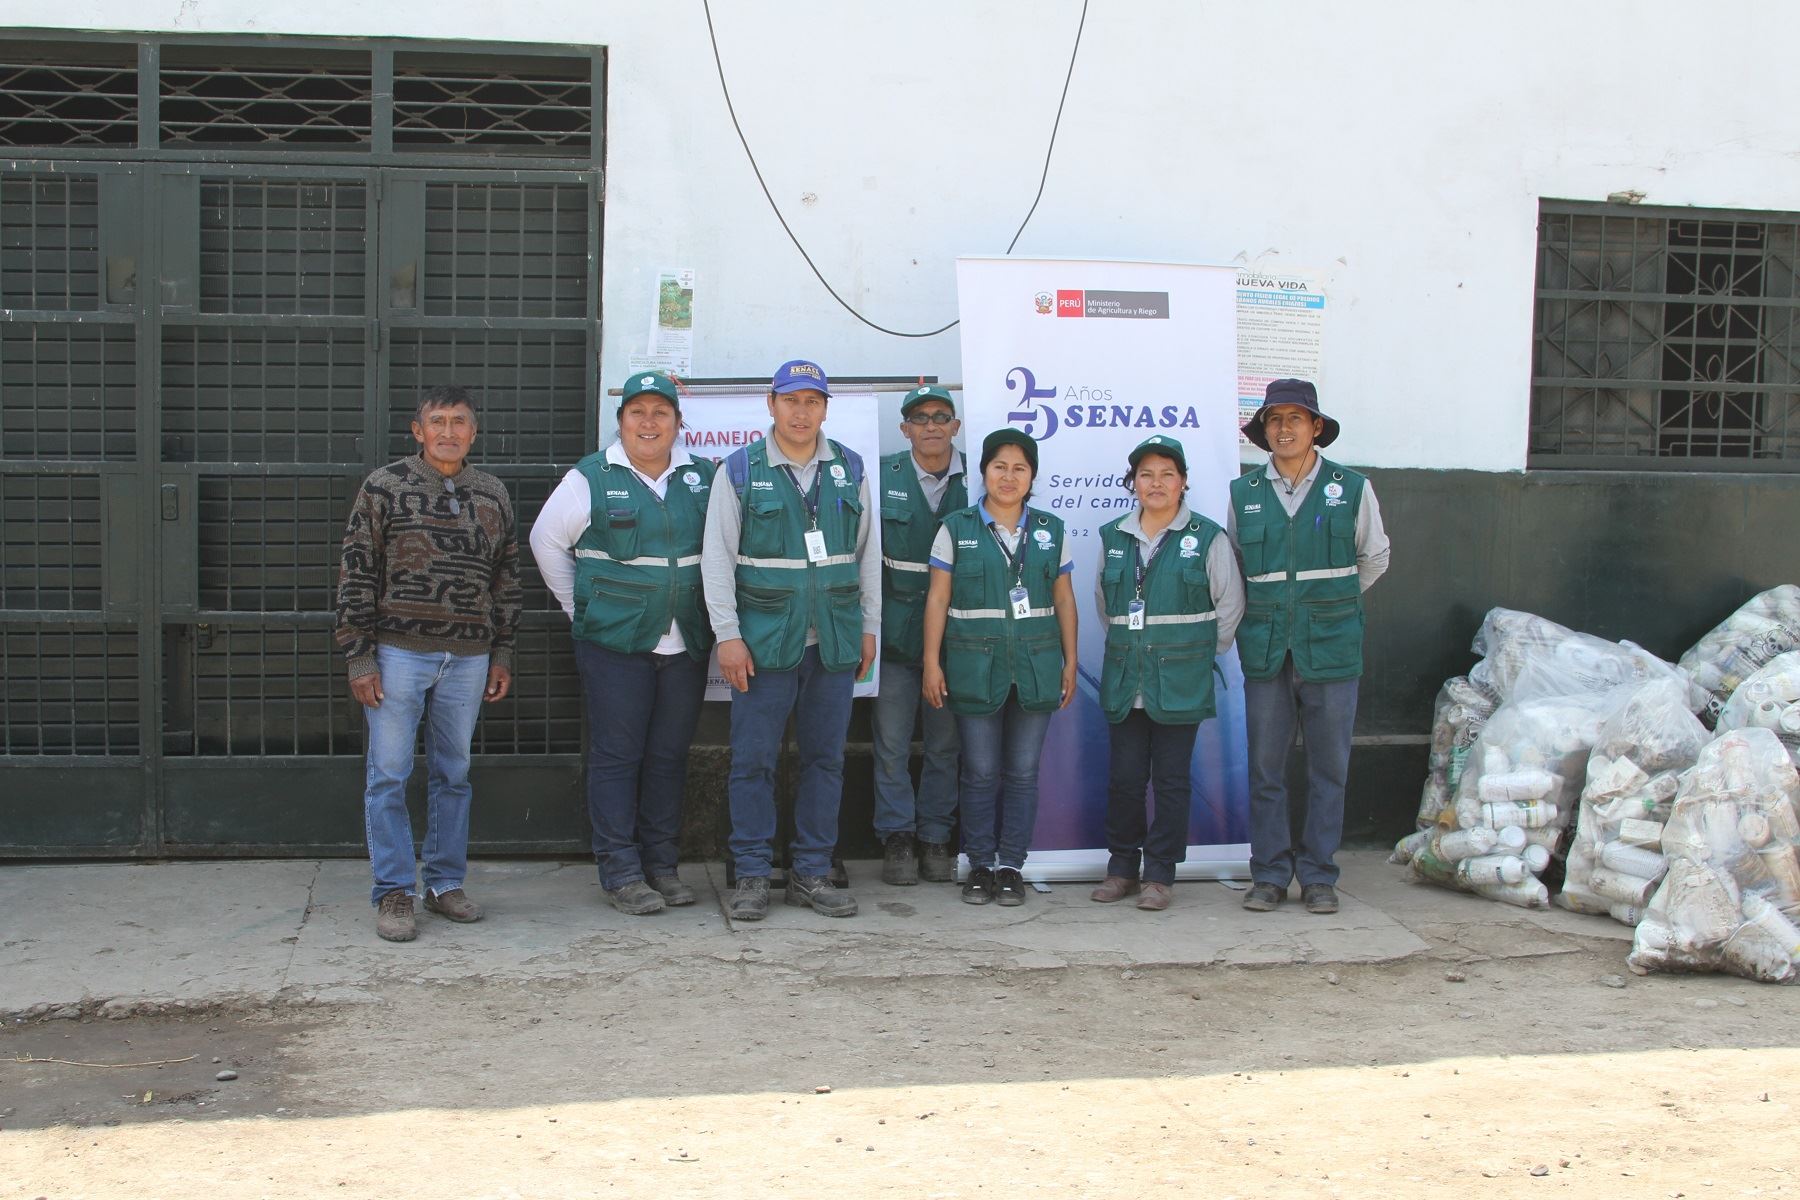 Senasa y agricultores colectan 1.7 toneladas de envases de plaguicidas en Huaral